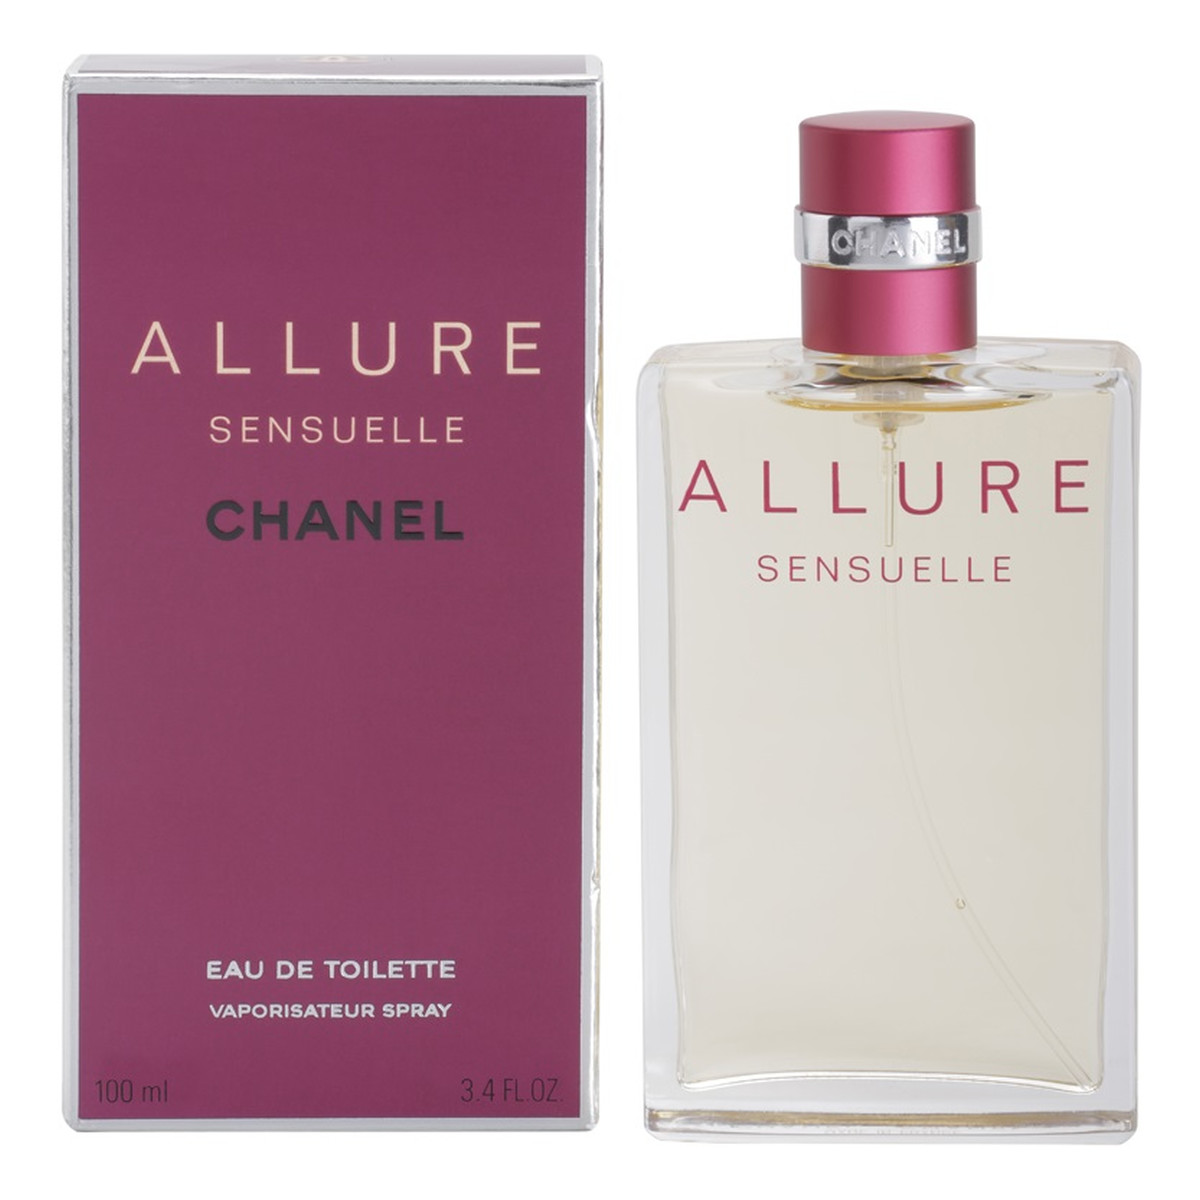 Chanel Allure Sensuelle woda toaletowa dla kobiet 100ml